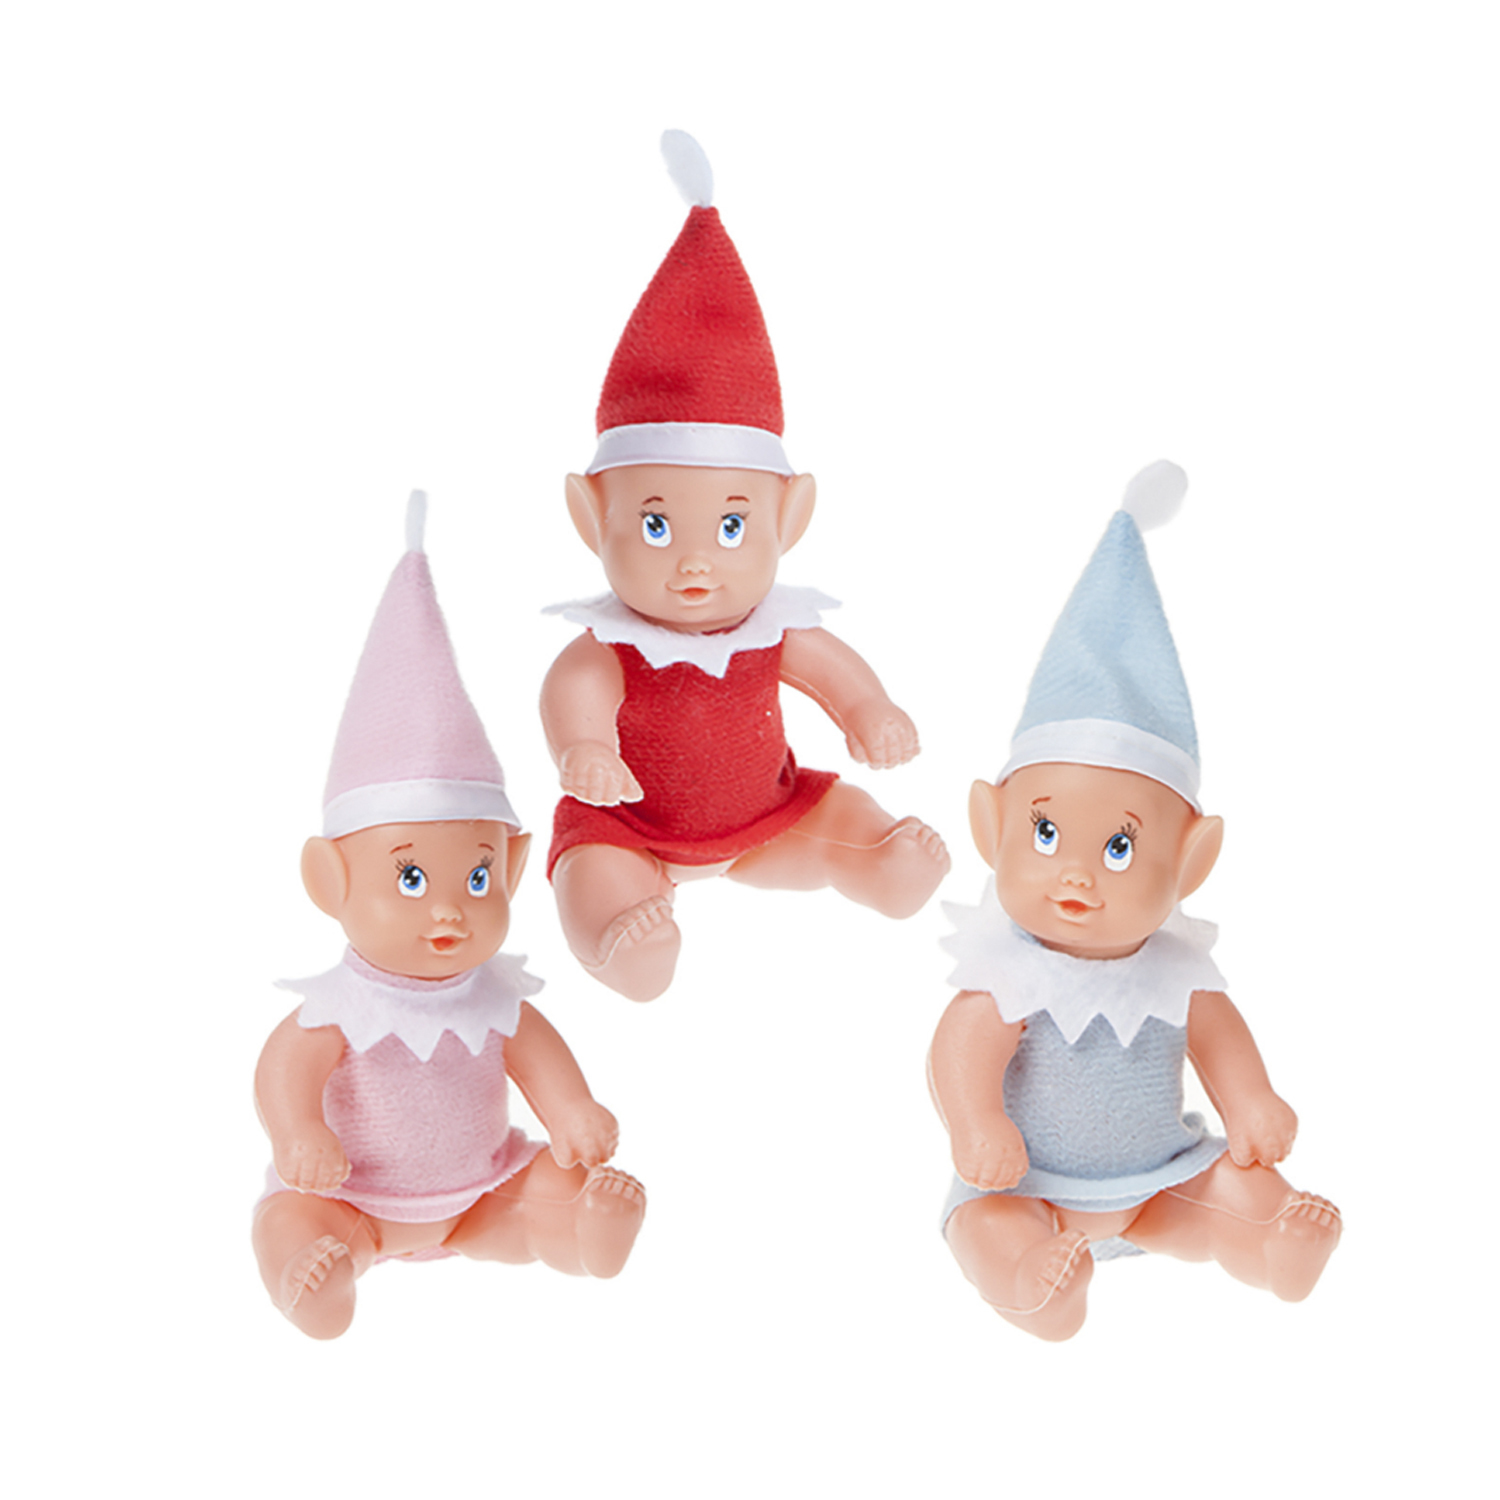 Baby Elf Figure Image